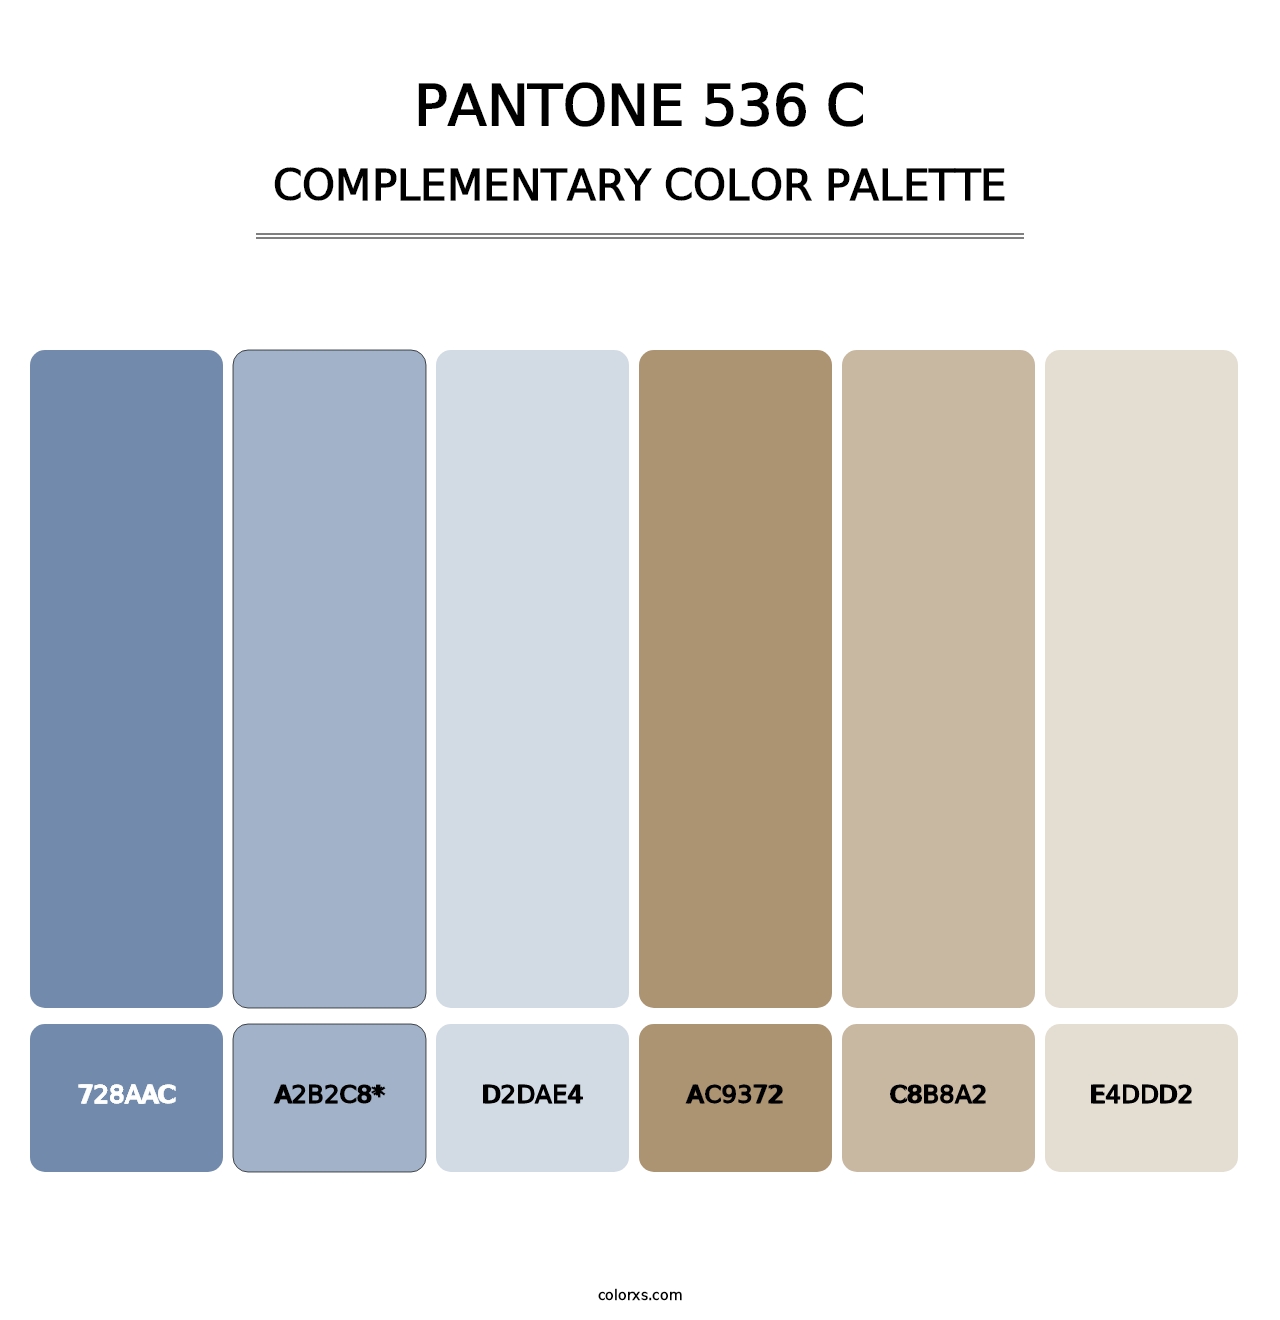 PANTONE 536 C - Complementary Color Palette